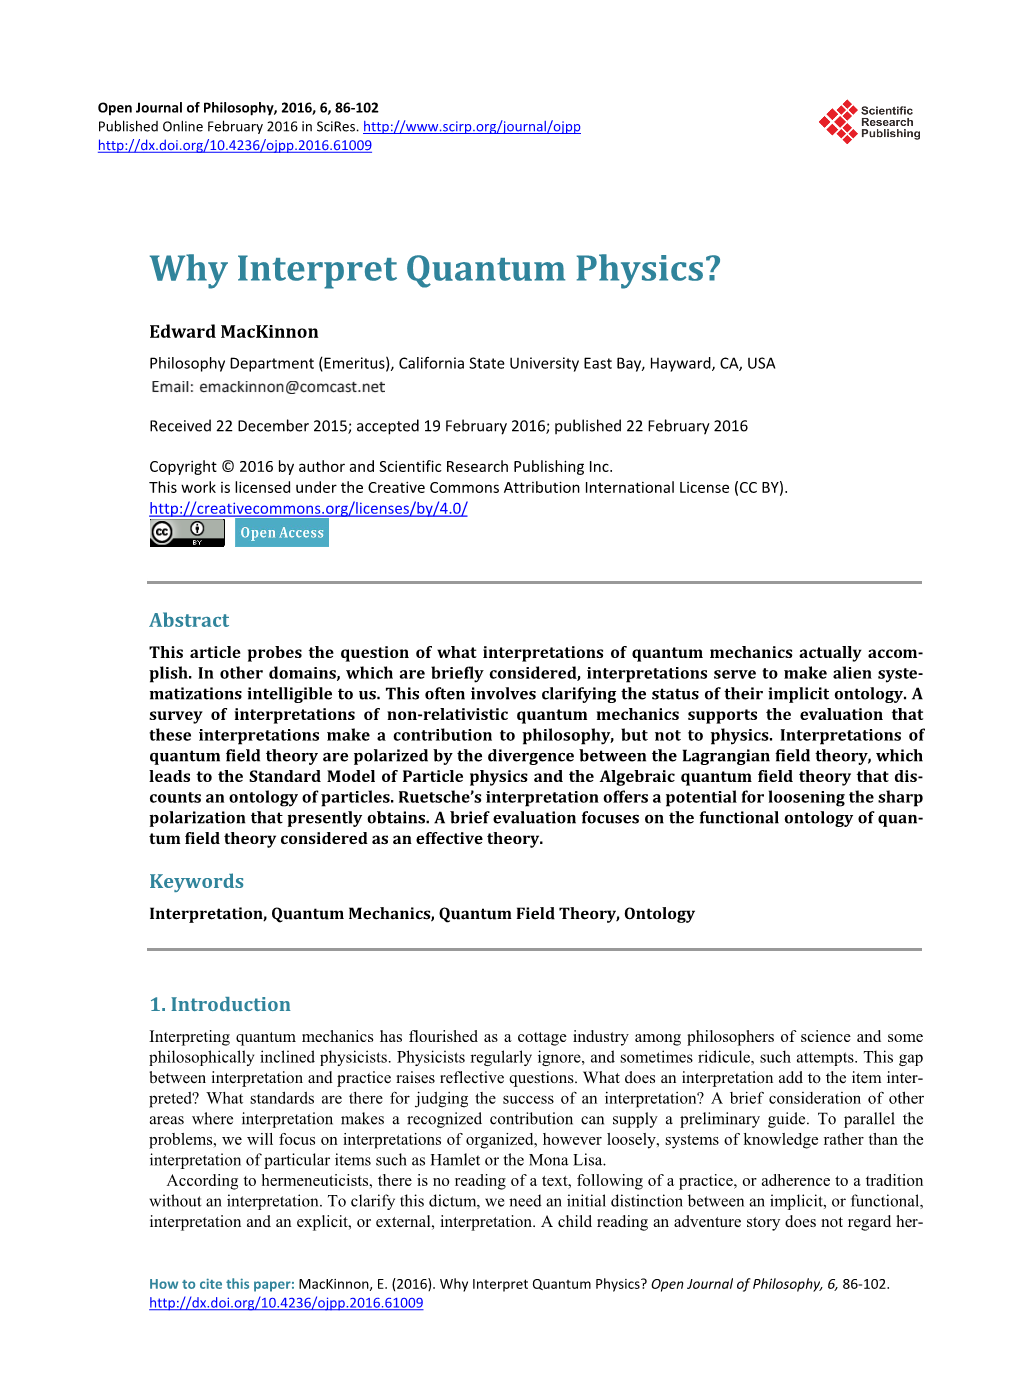 Why Interpret Quantum Physics?